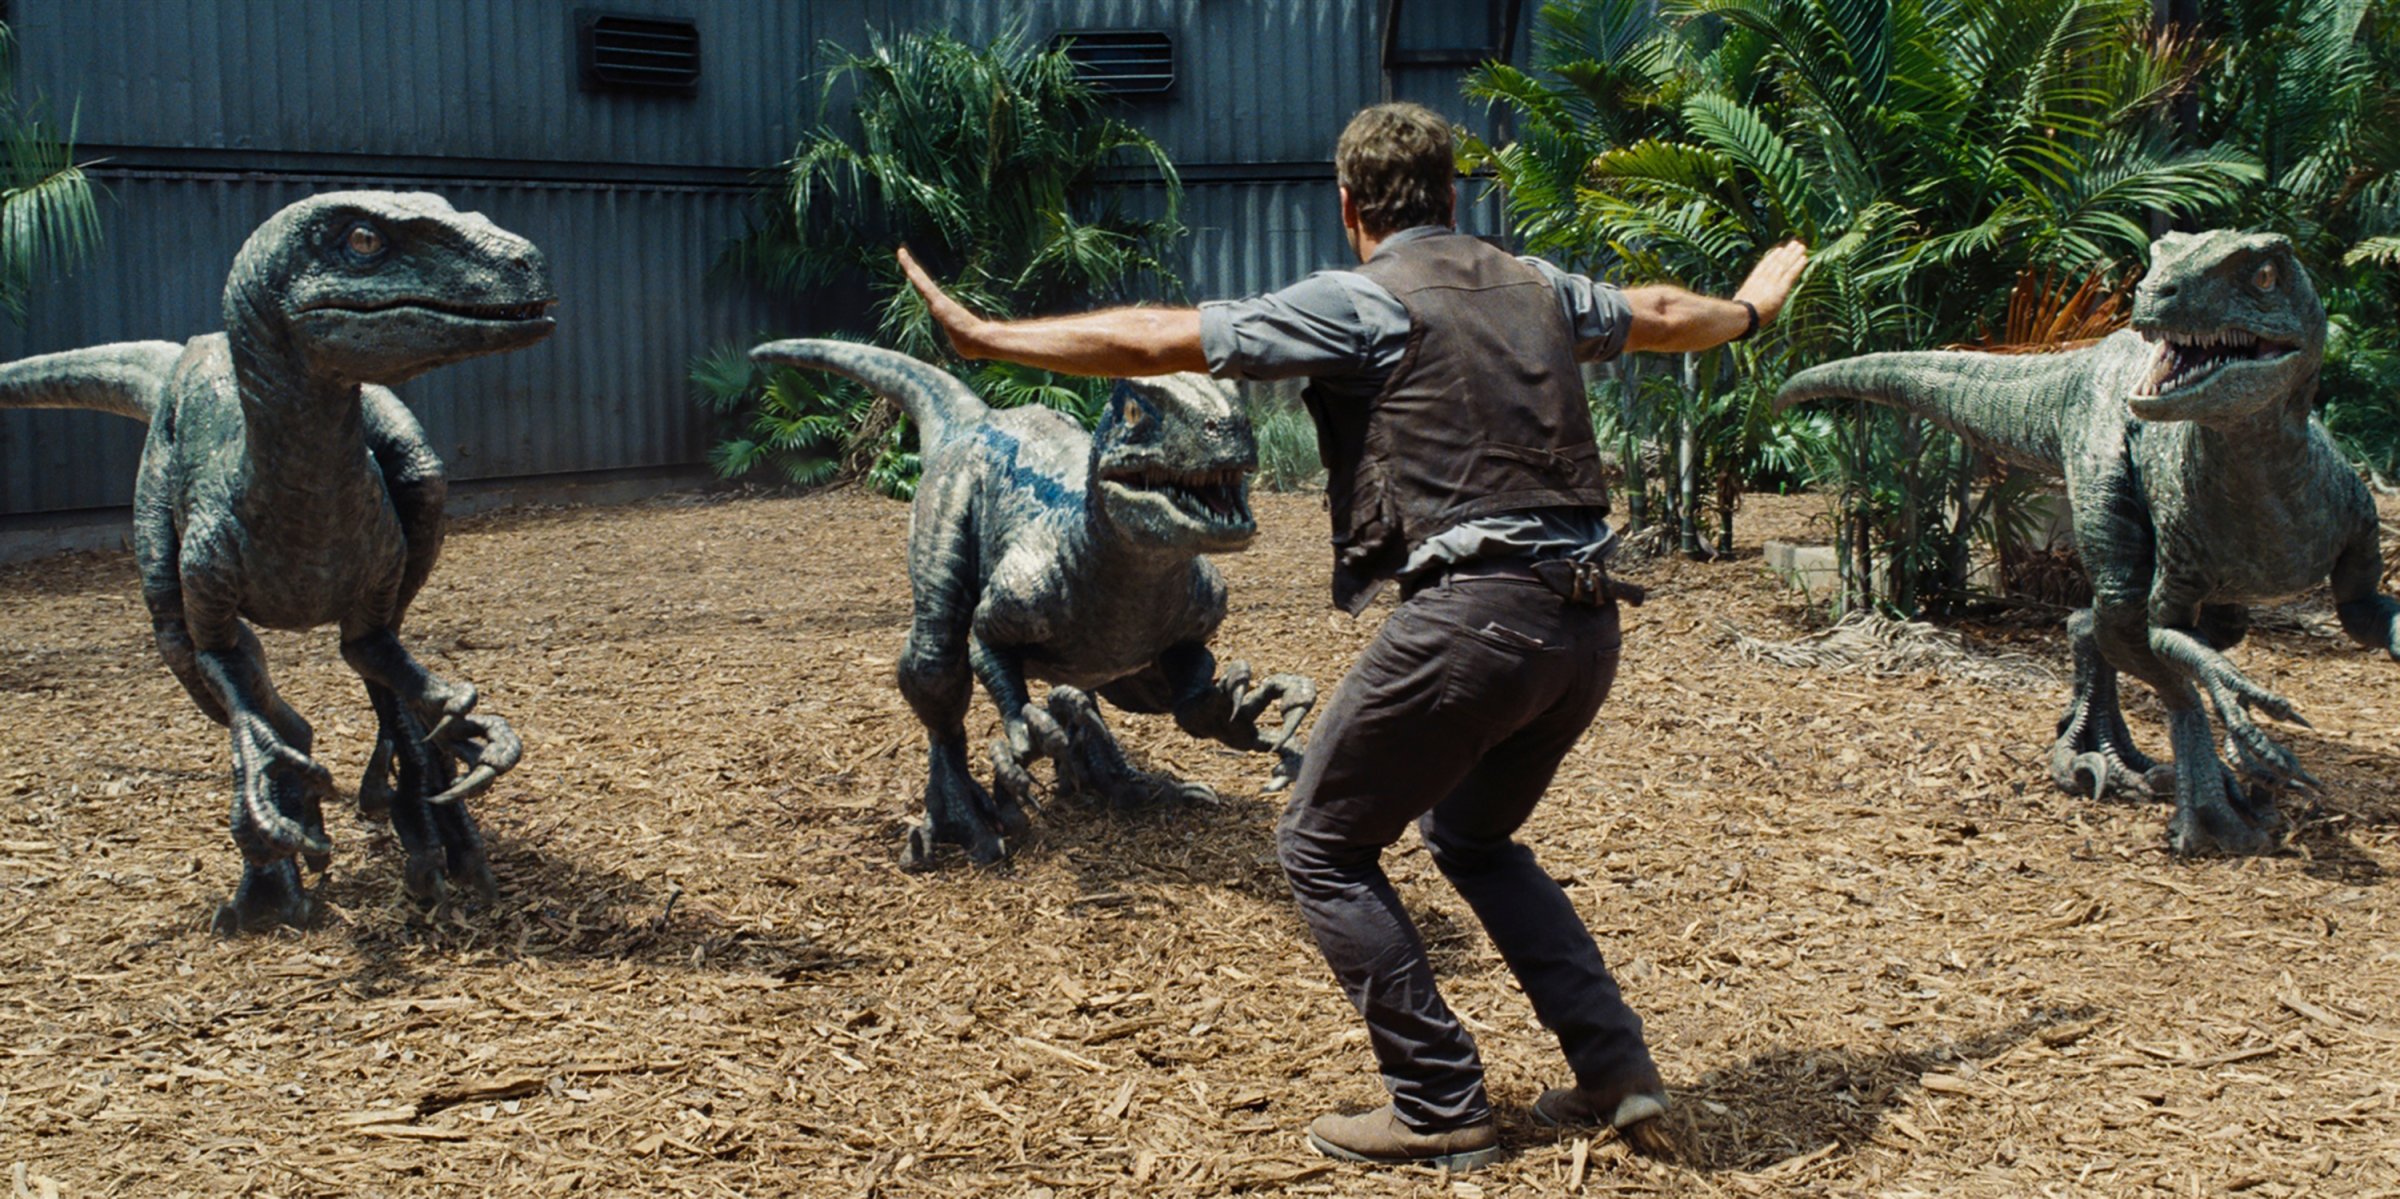 Chris Pratt as Owen in a scene from Universal Pictures' Jurassic World.